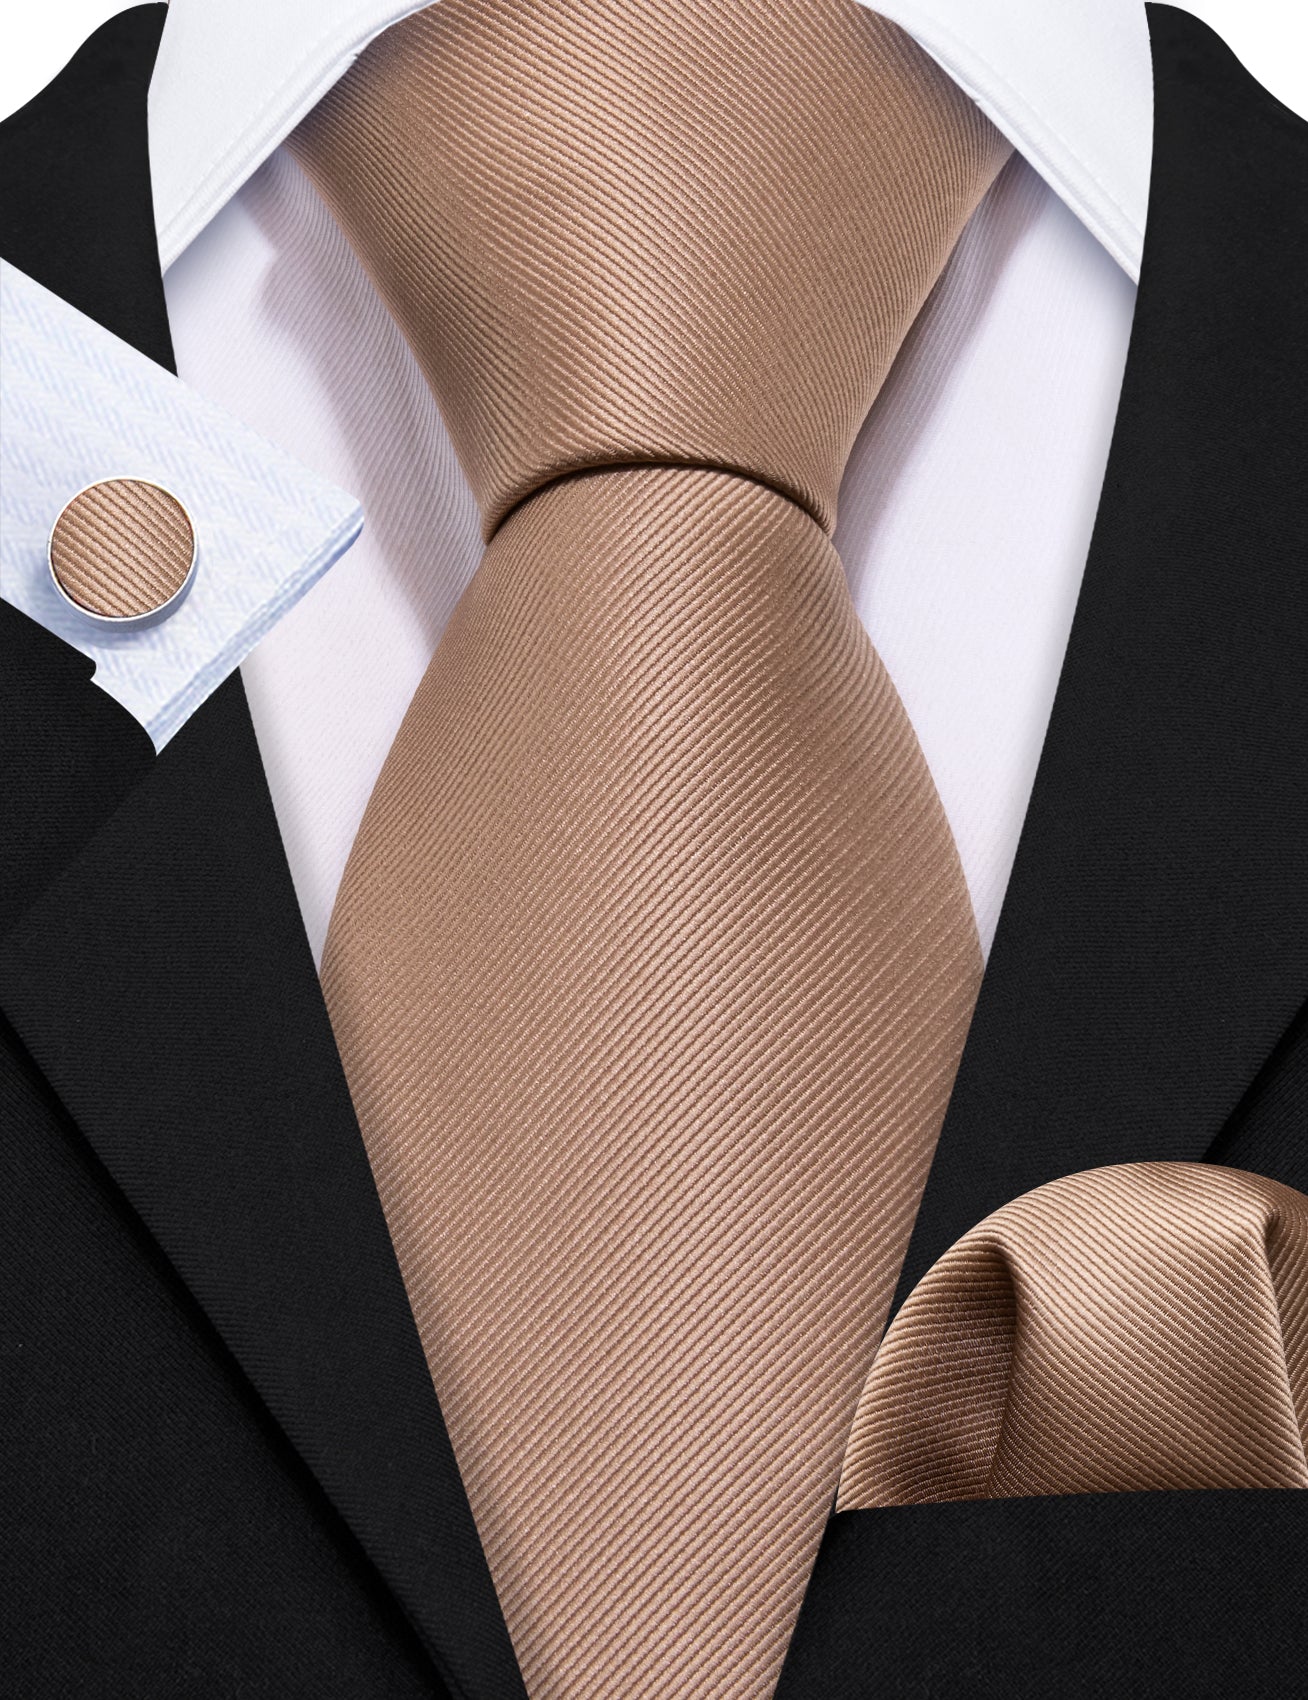 Tan Solid Silk Tie Pocket Square Cufflinks Set